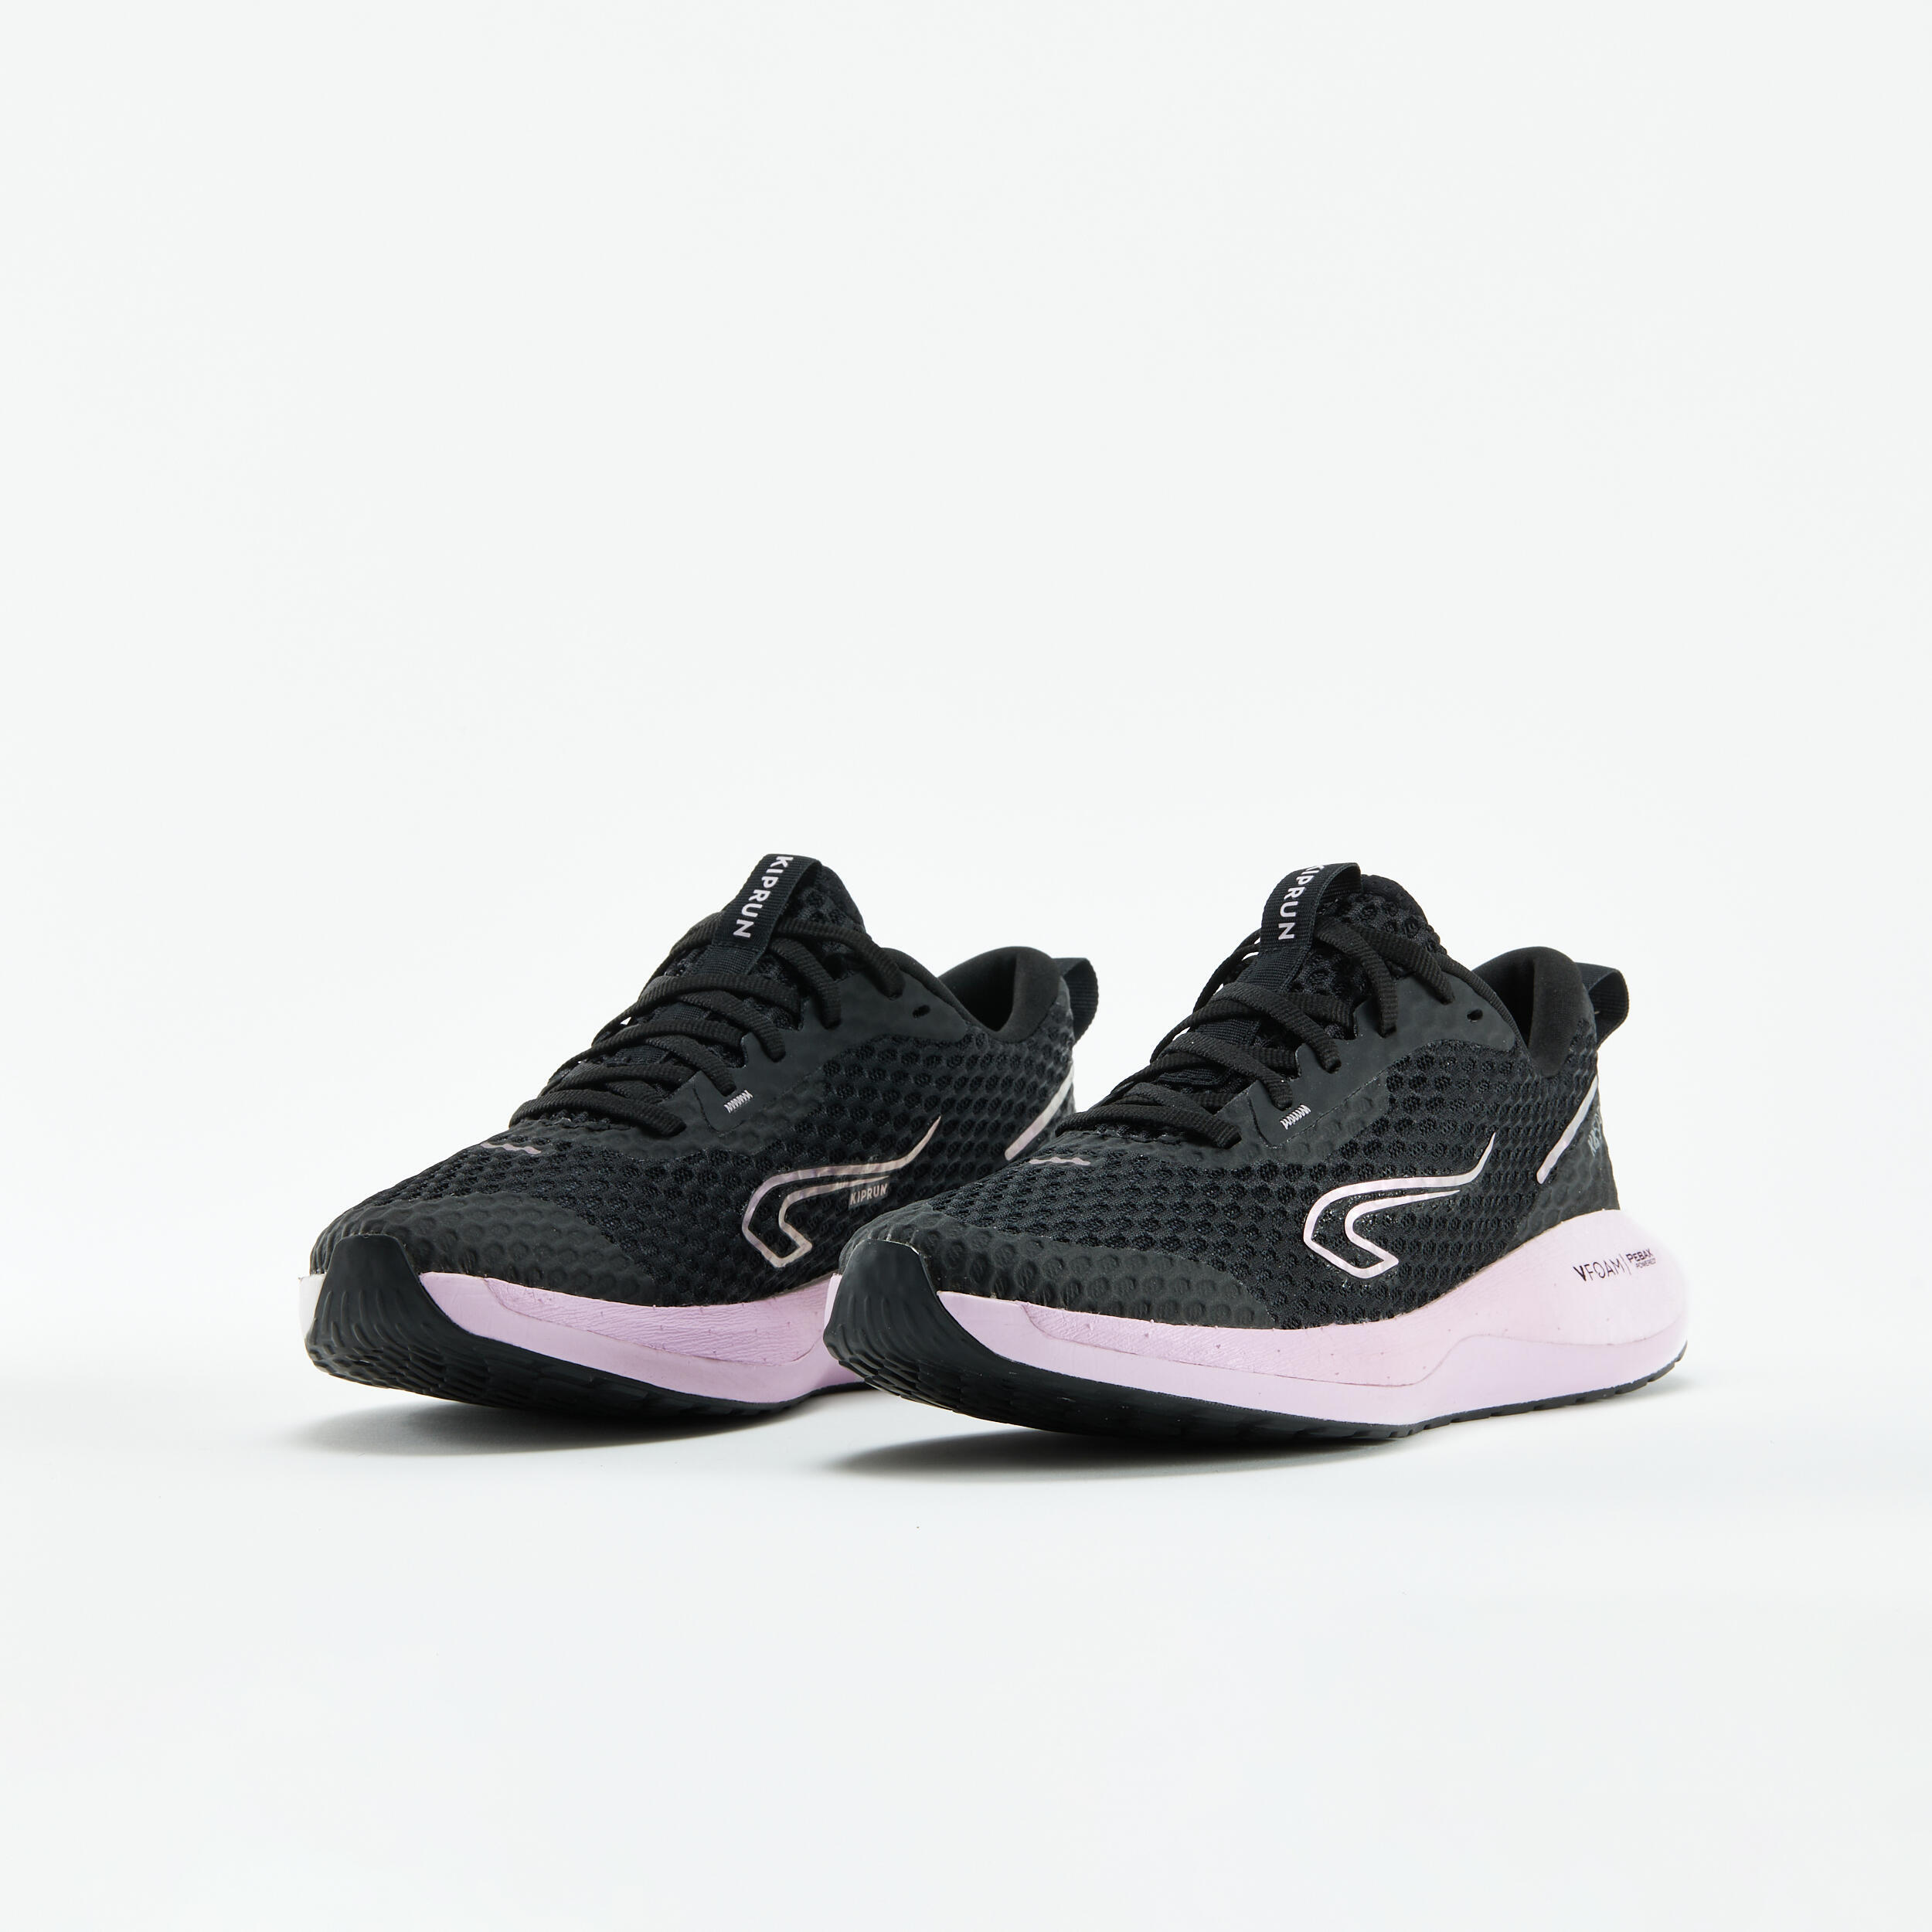 KD500 2 women's running shoes - black/mauve 2/8